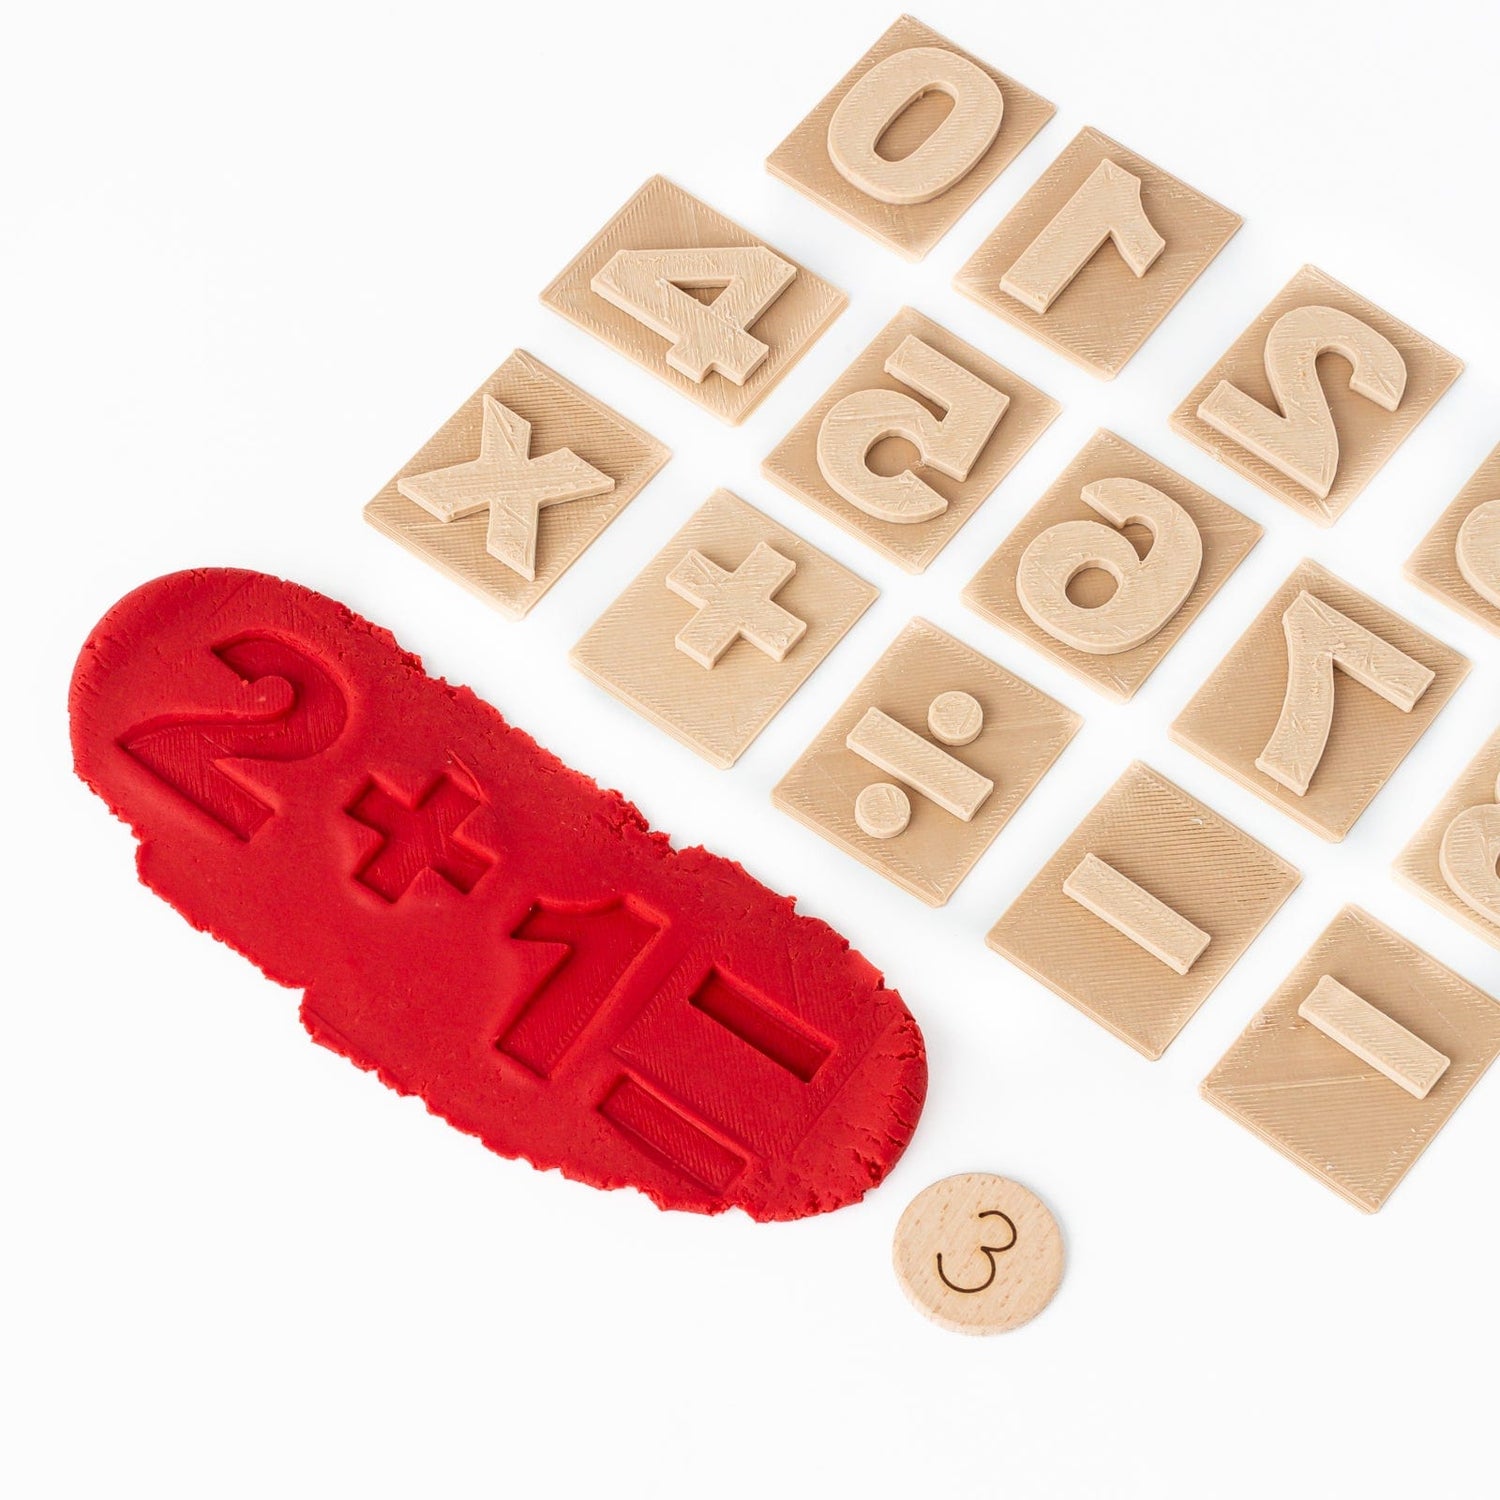 Kinfolk Pantry Sensory Play Numbers & Math's Eco Stamp Set